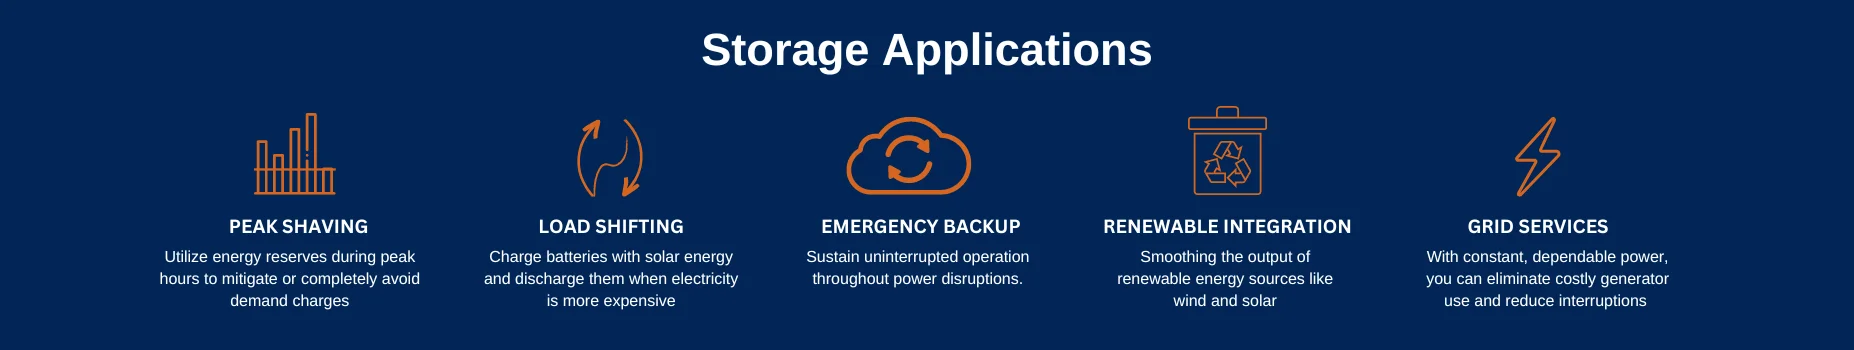 Storage Applications